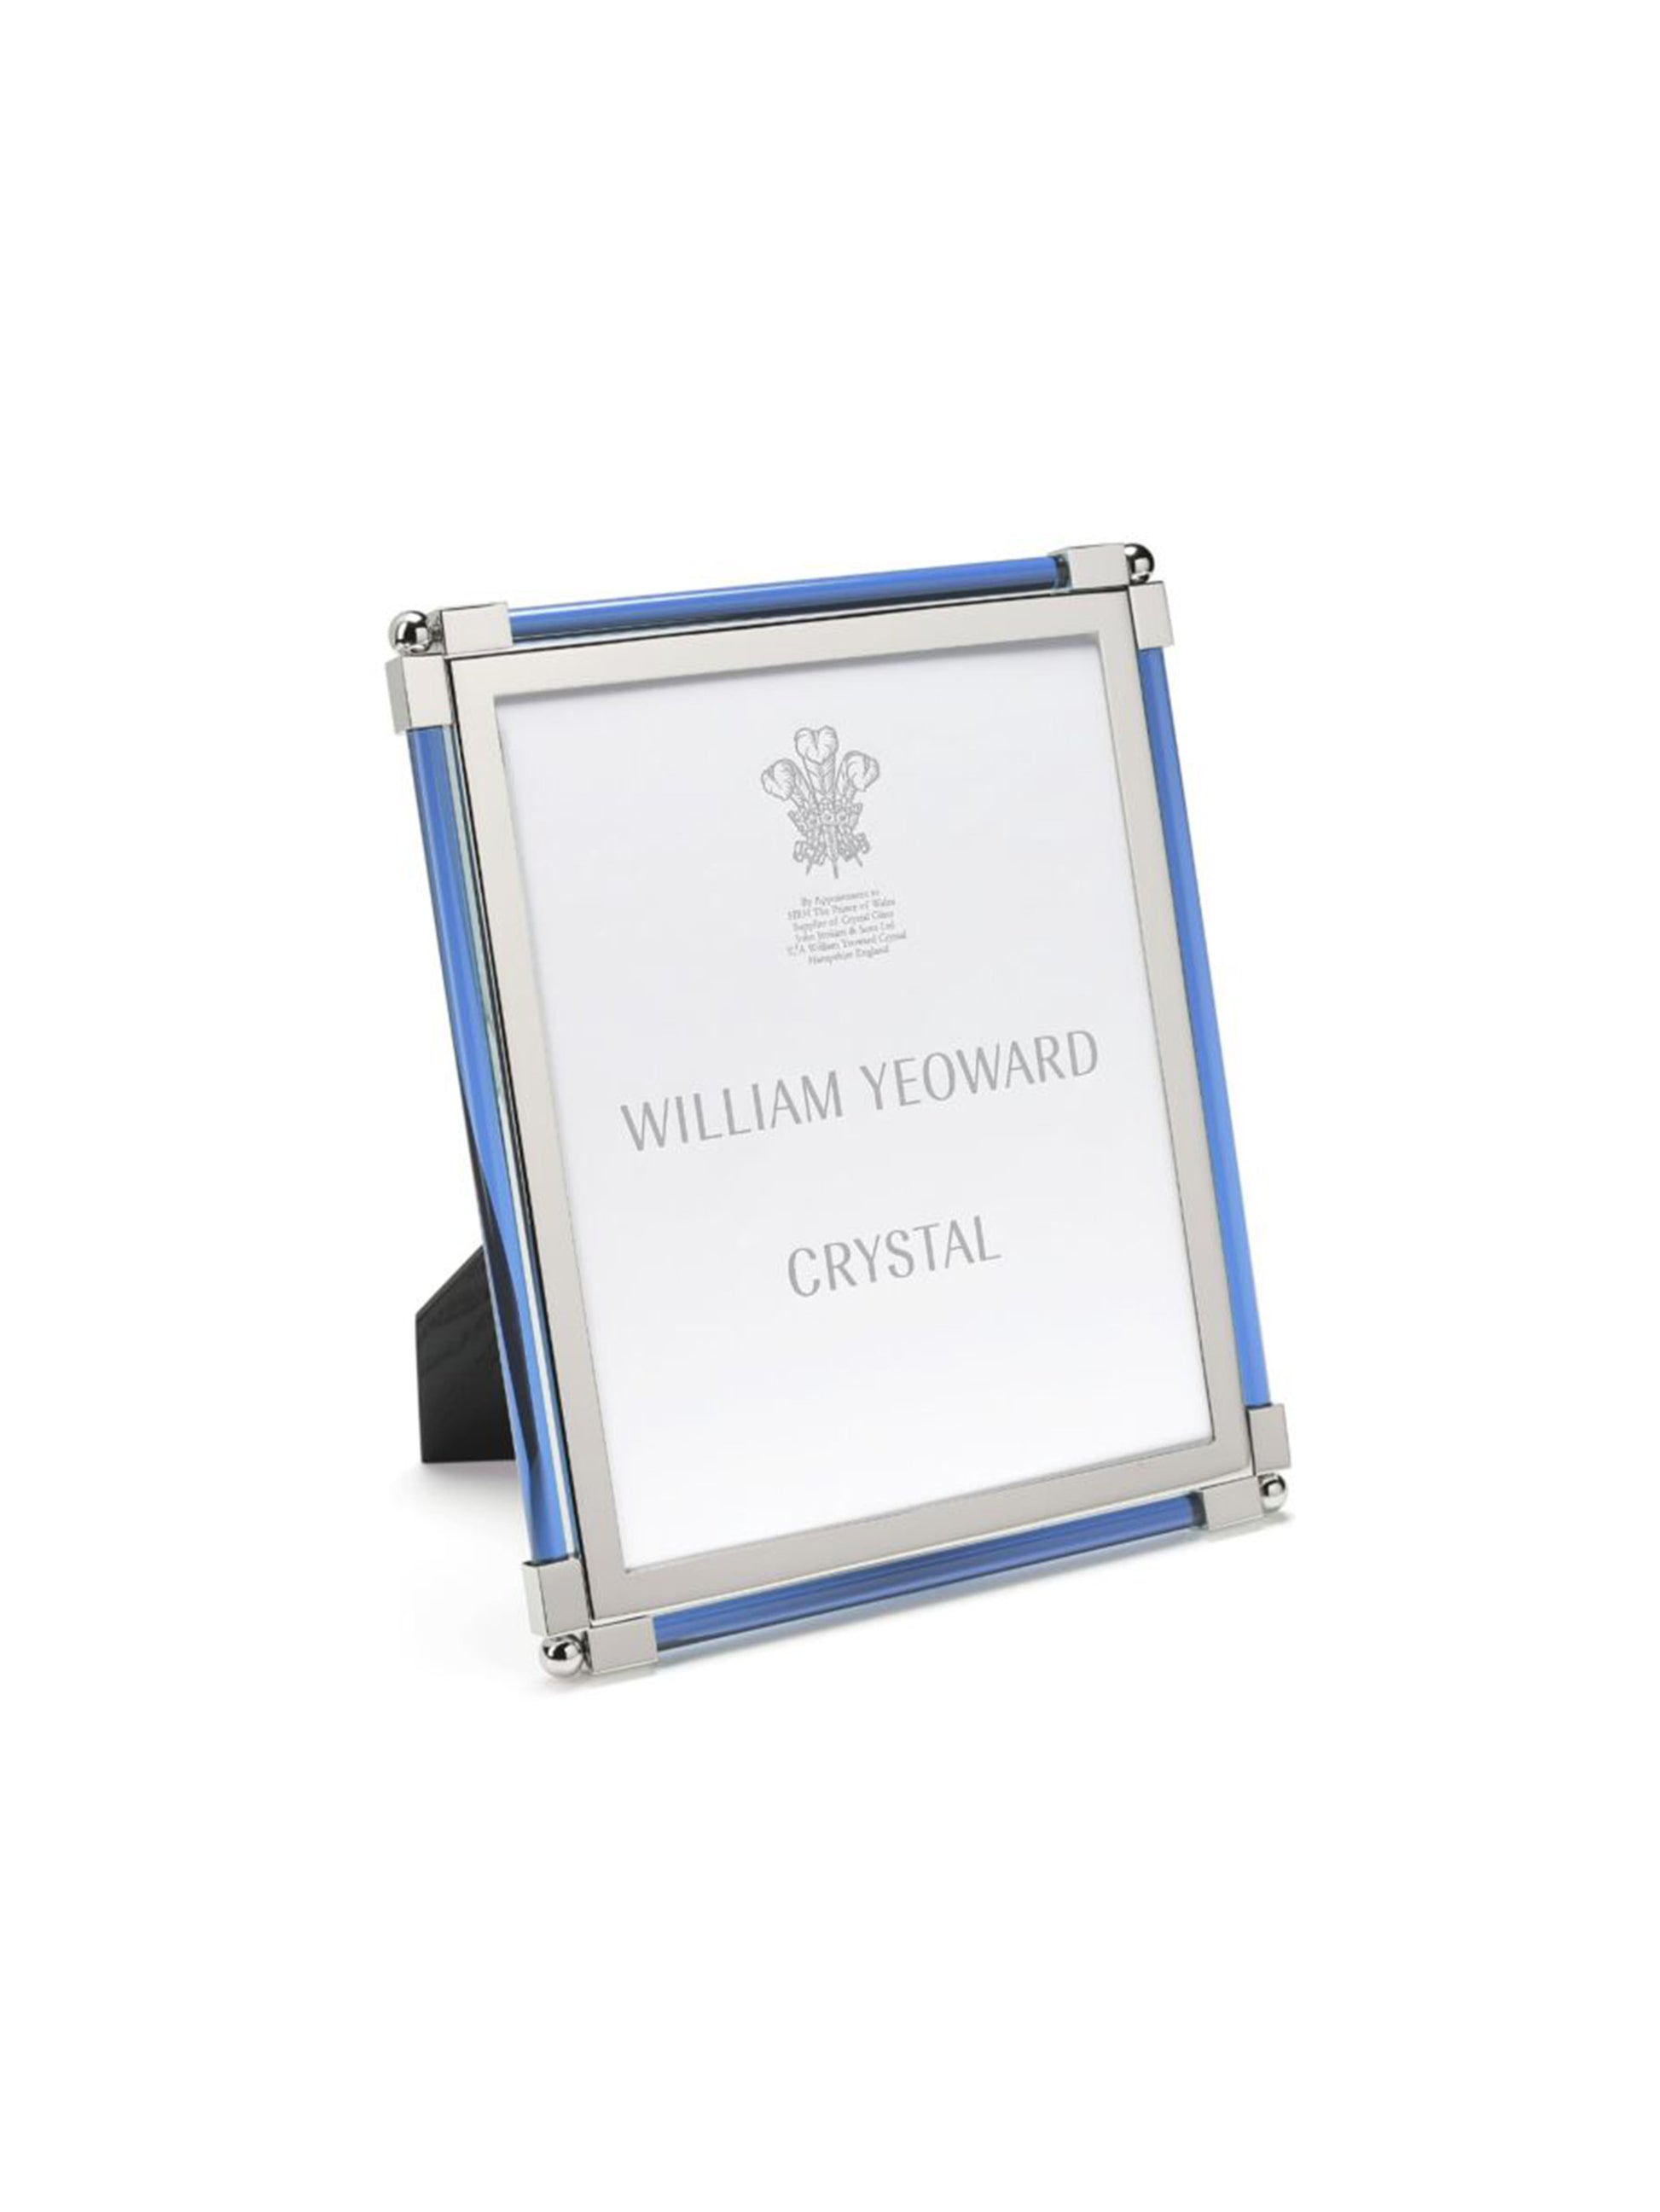 William Yeoward Crystal Classic Blue Photo Frame 8 x 10 Weston Table